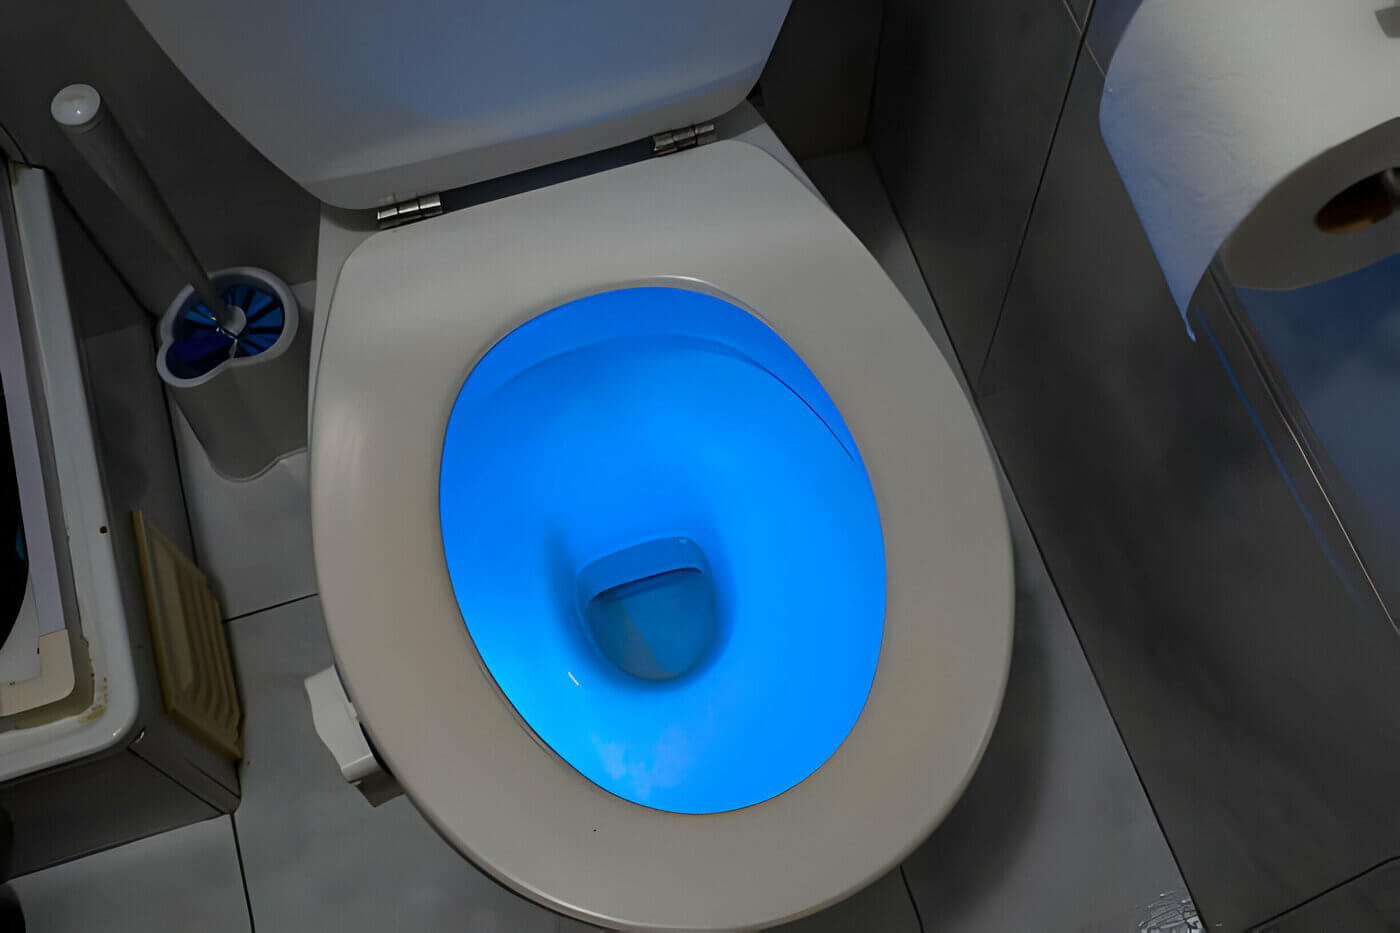 led lights on a toilet bowl